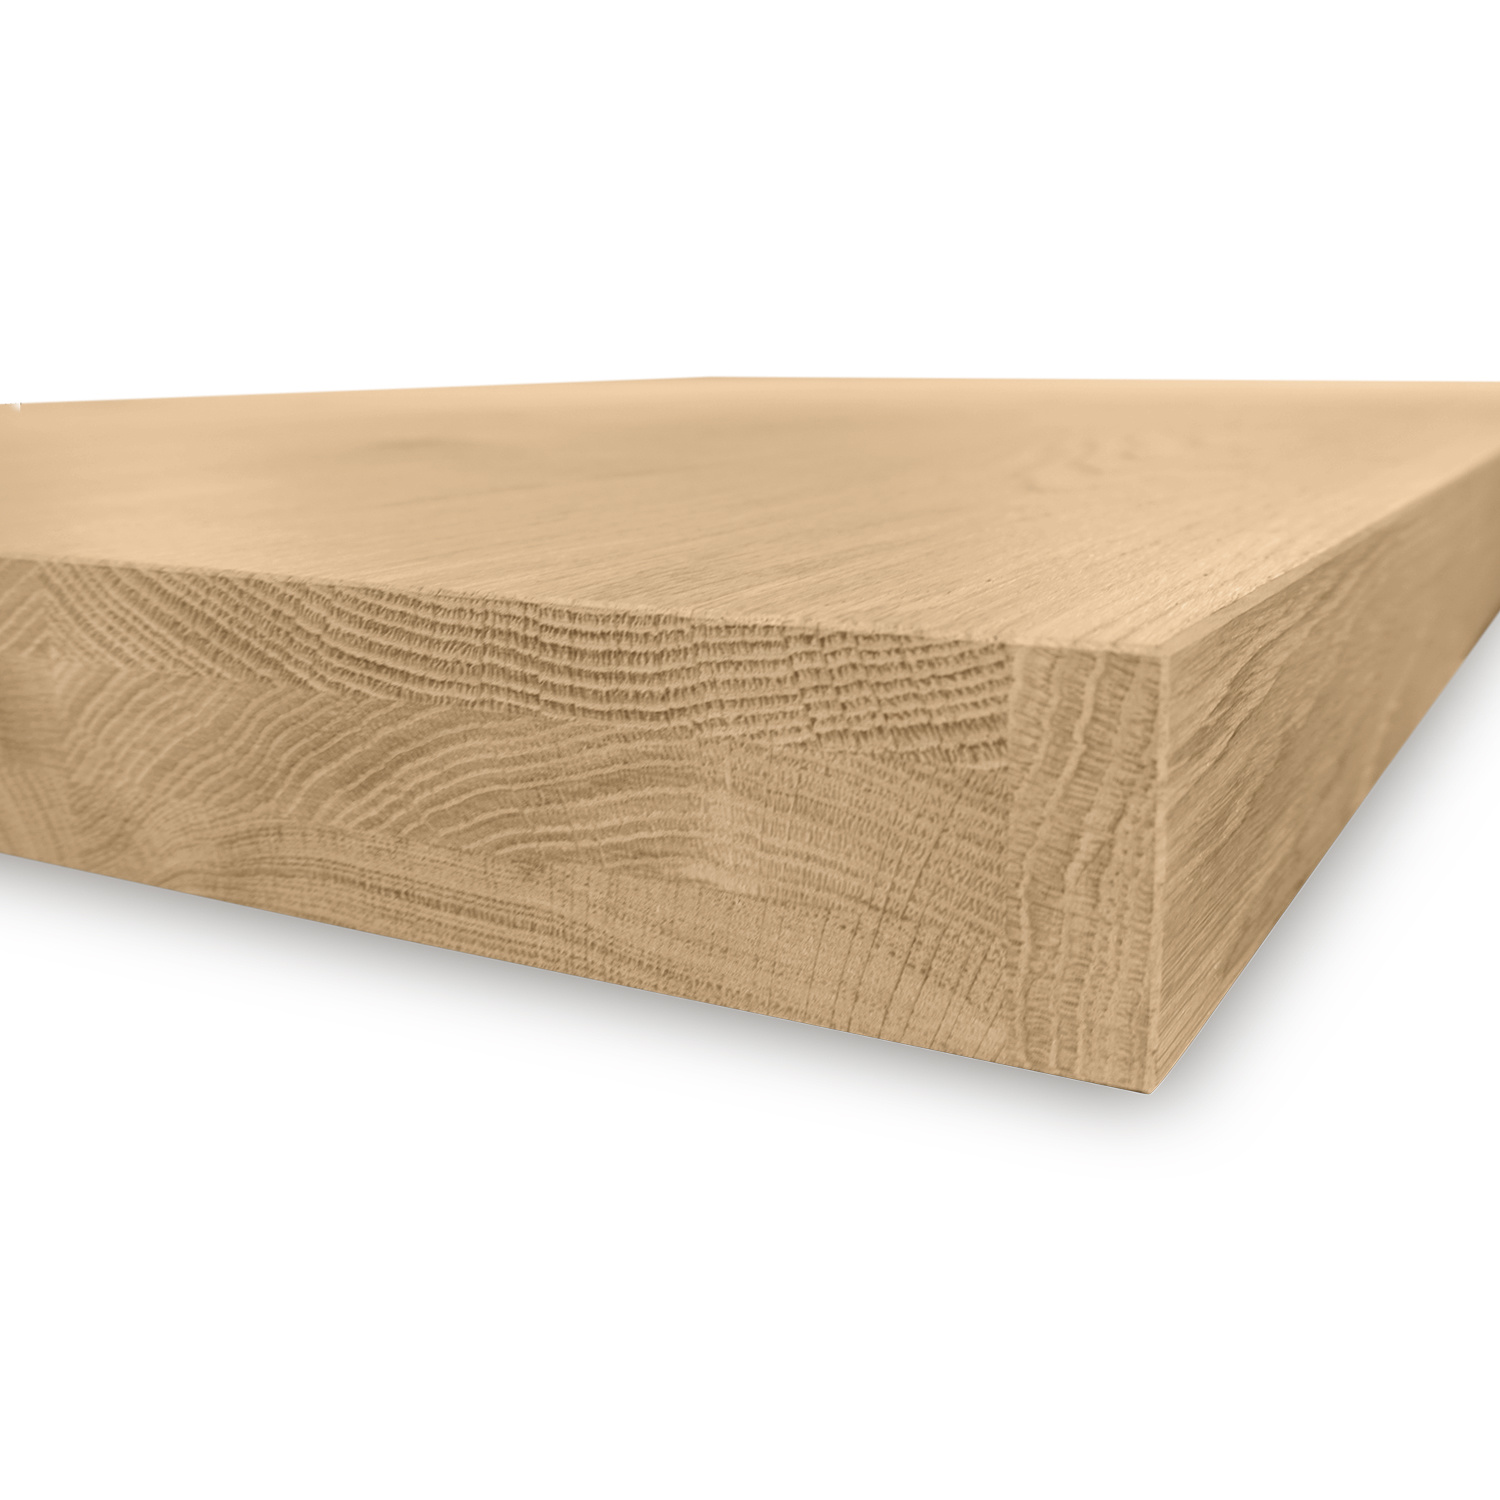  Eiken tafelblad op maat - 6 cm dik (3 laags) - foutvrij Europees eikenhout - verlijmd kd 8-12% - 70-120x140-350 cm